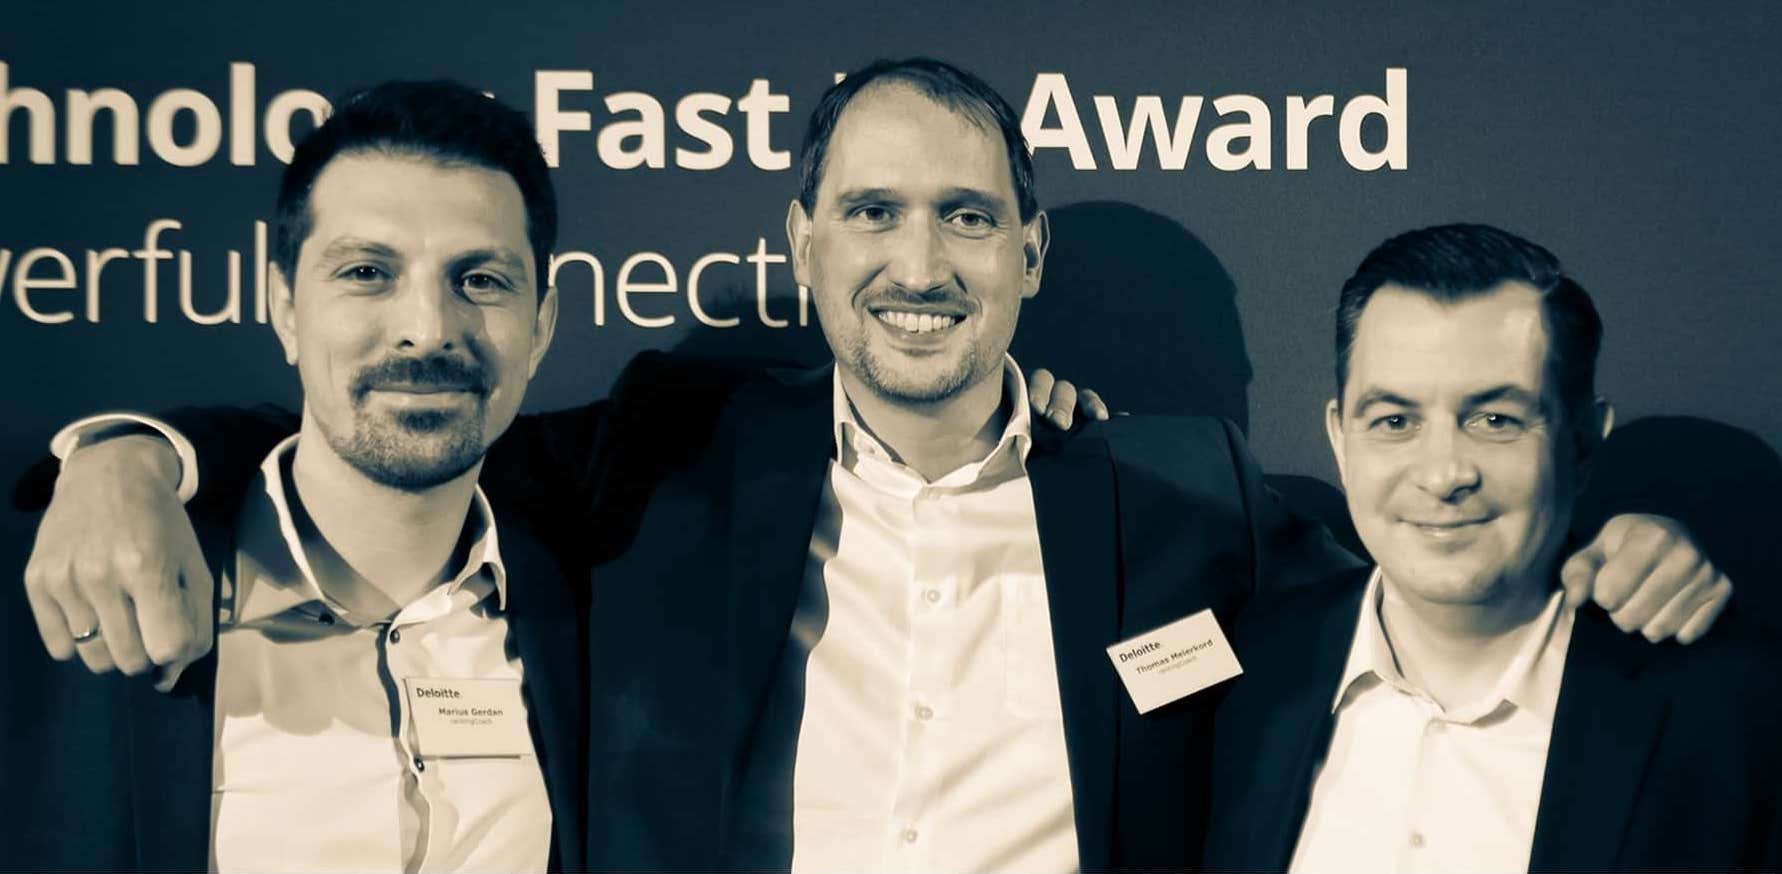 rankingCoach zdobywa nagrodę Deloitte's Technology Fast 50 Award 2018